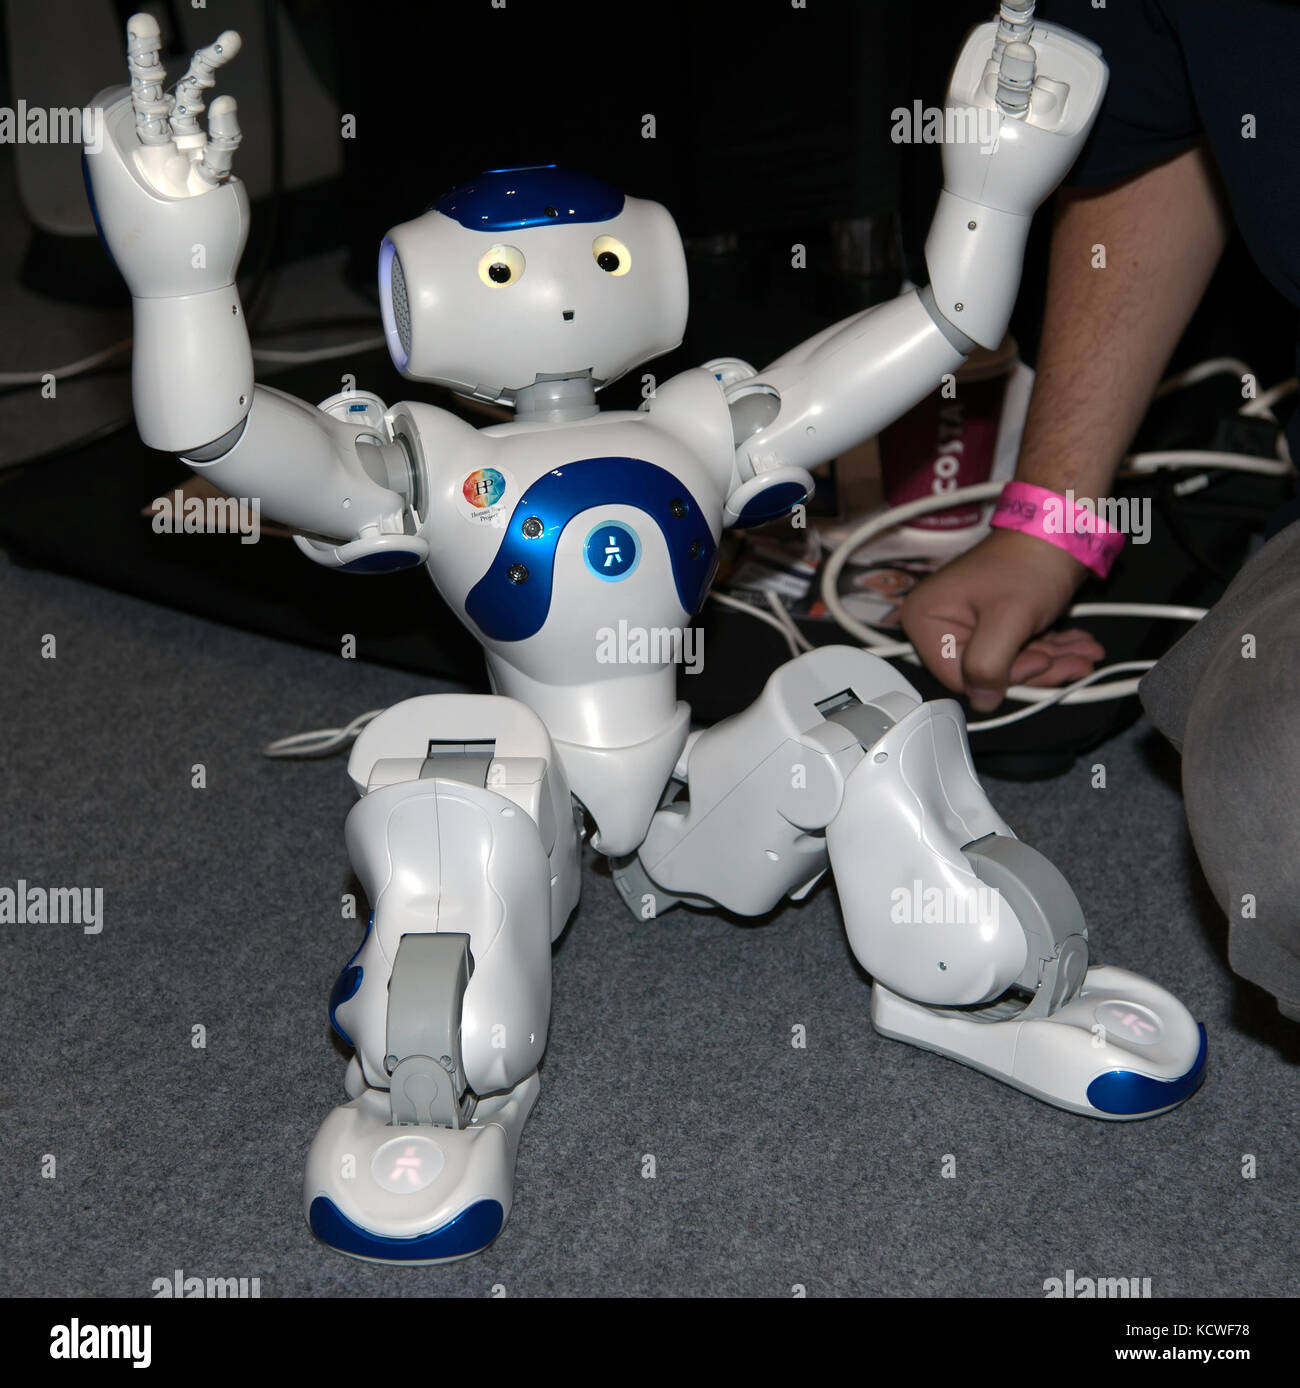 Nao, an autonomous, programmable humanoid robot, entertaining children at New Scientist Live 2017 Stock Photo